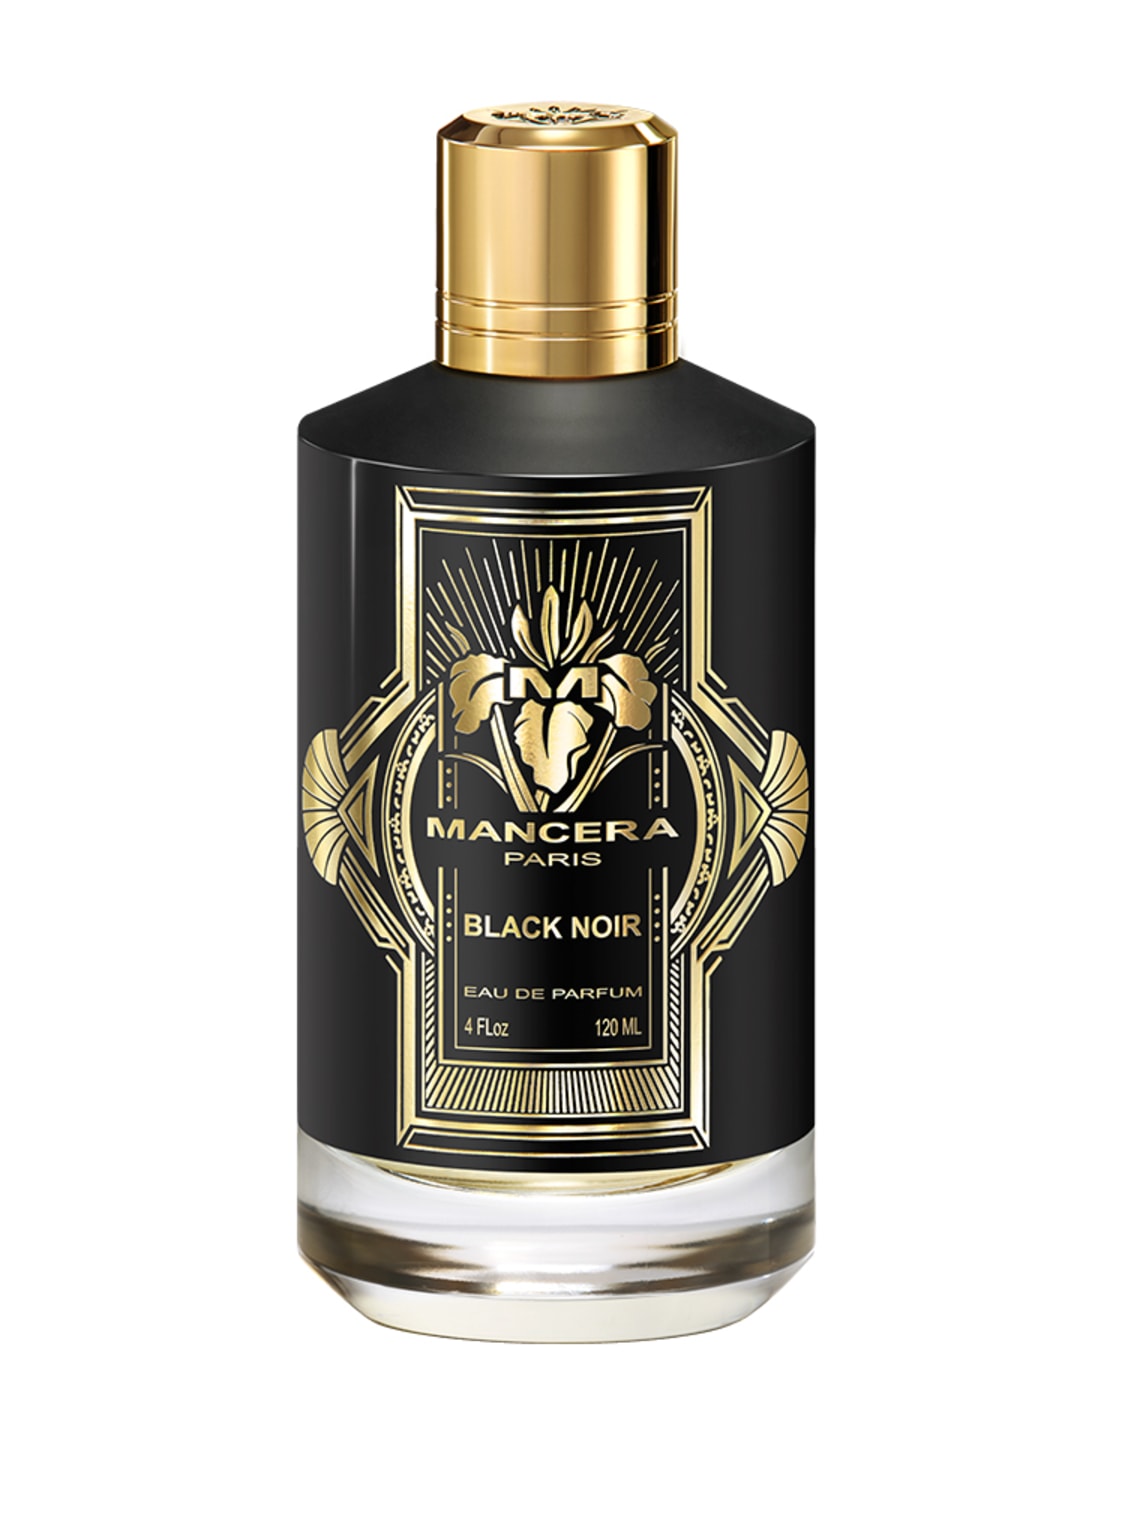 Mancera Black Noir Eau de Parfum 120 ml von MANCERA